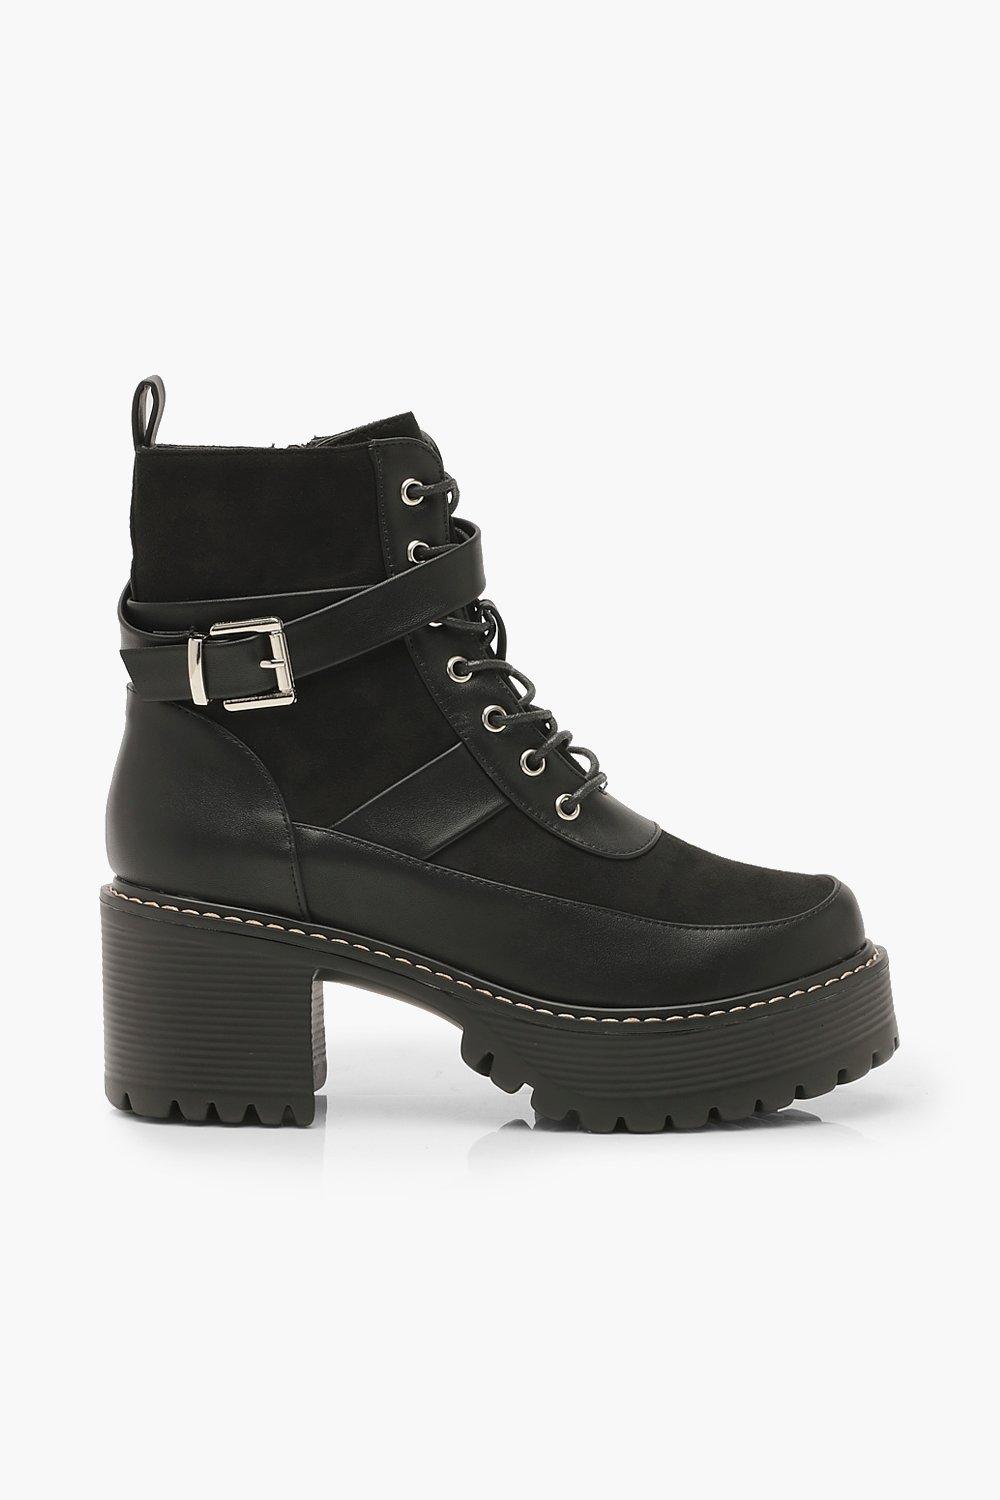 Midcalf Belt Buckle Black Boots Platform High Heel Shoes | Tajna Club EU44 /UK10/ USw13 / Other (Please State Below) / 16-17 cm